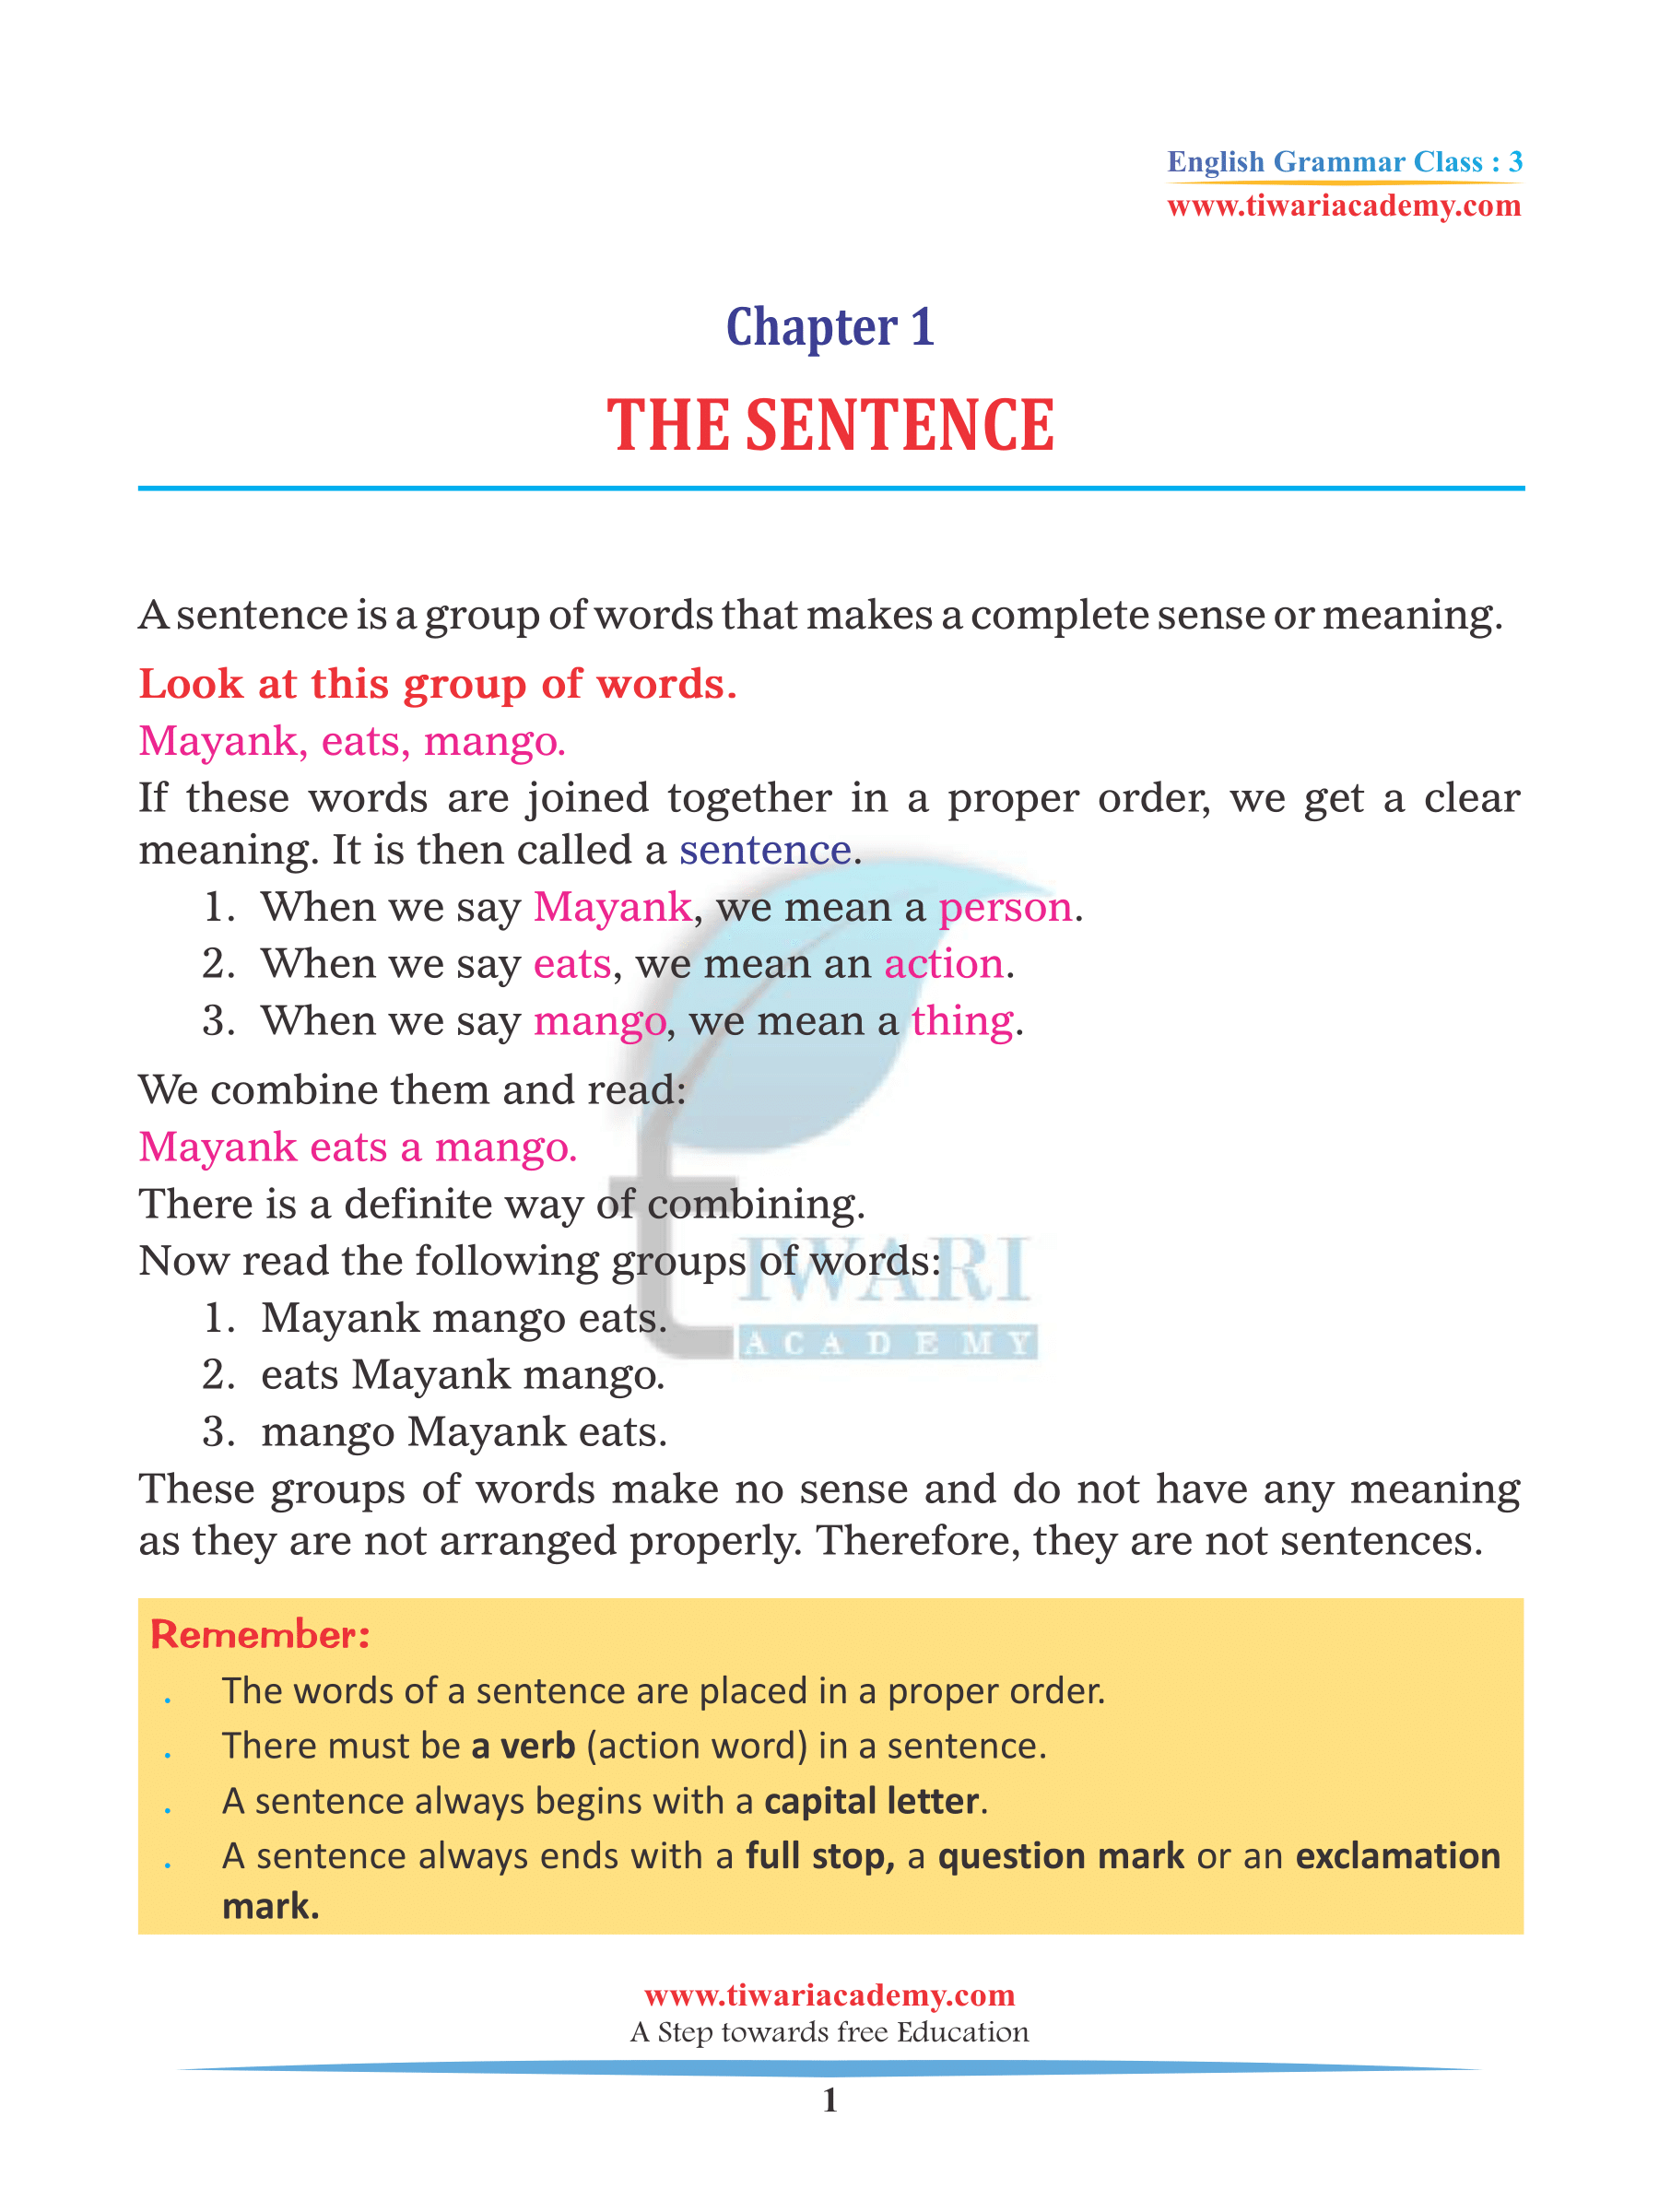 3rd English Grammar Chapter 1 The Sentence